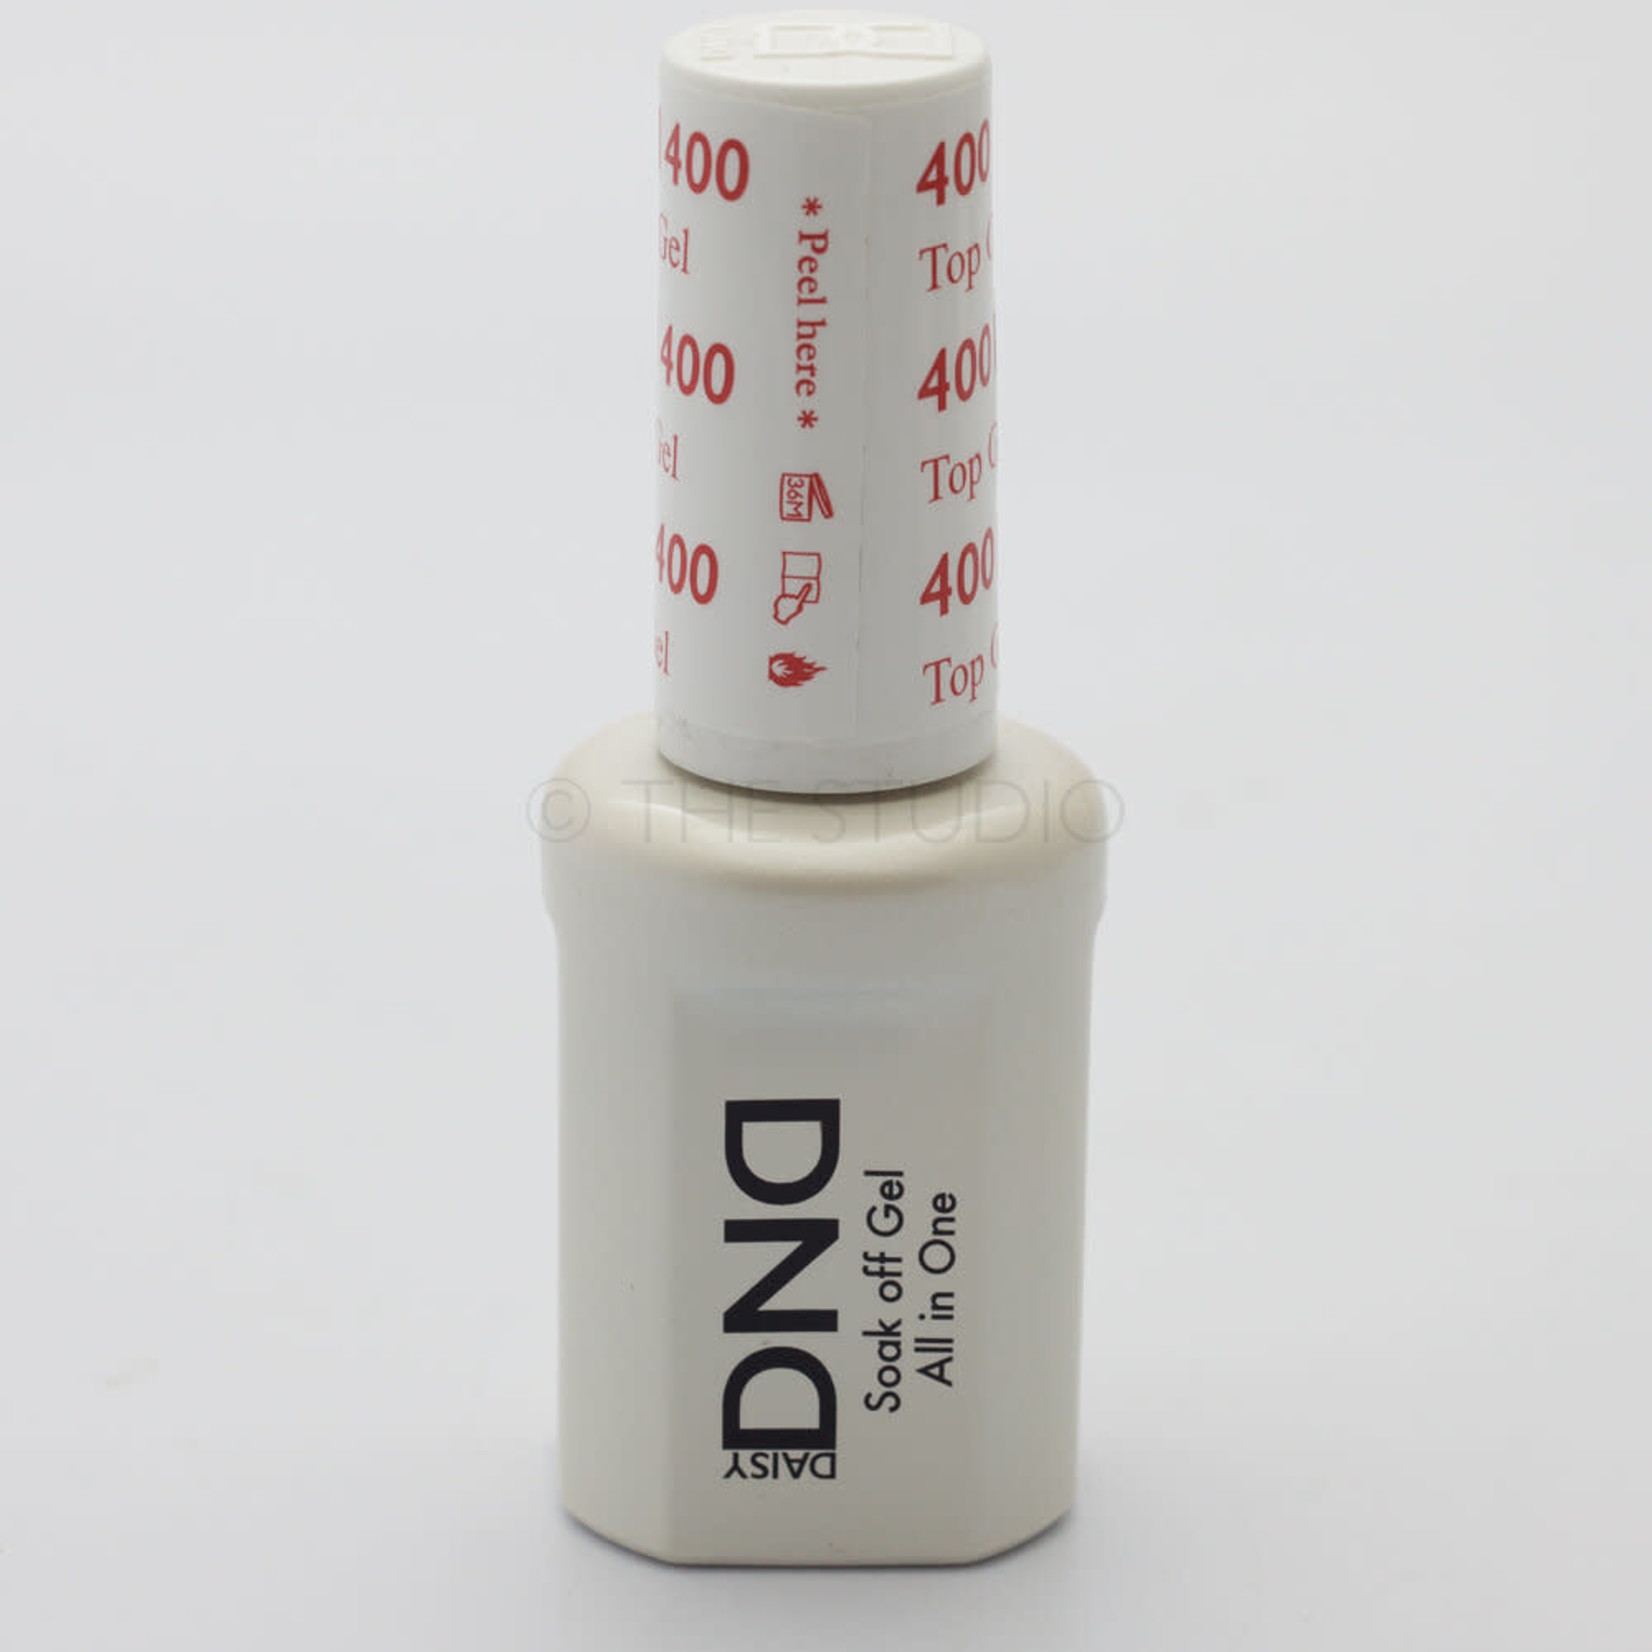 DND DND - Gel - 400 - Top Coat - 0.5 oz